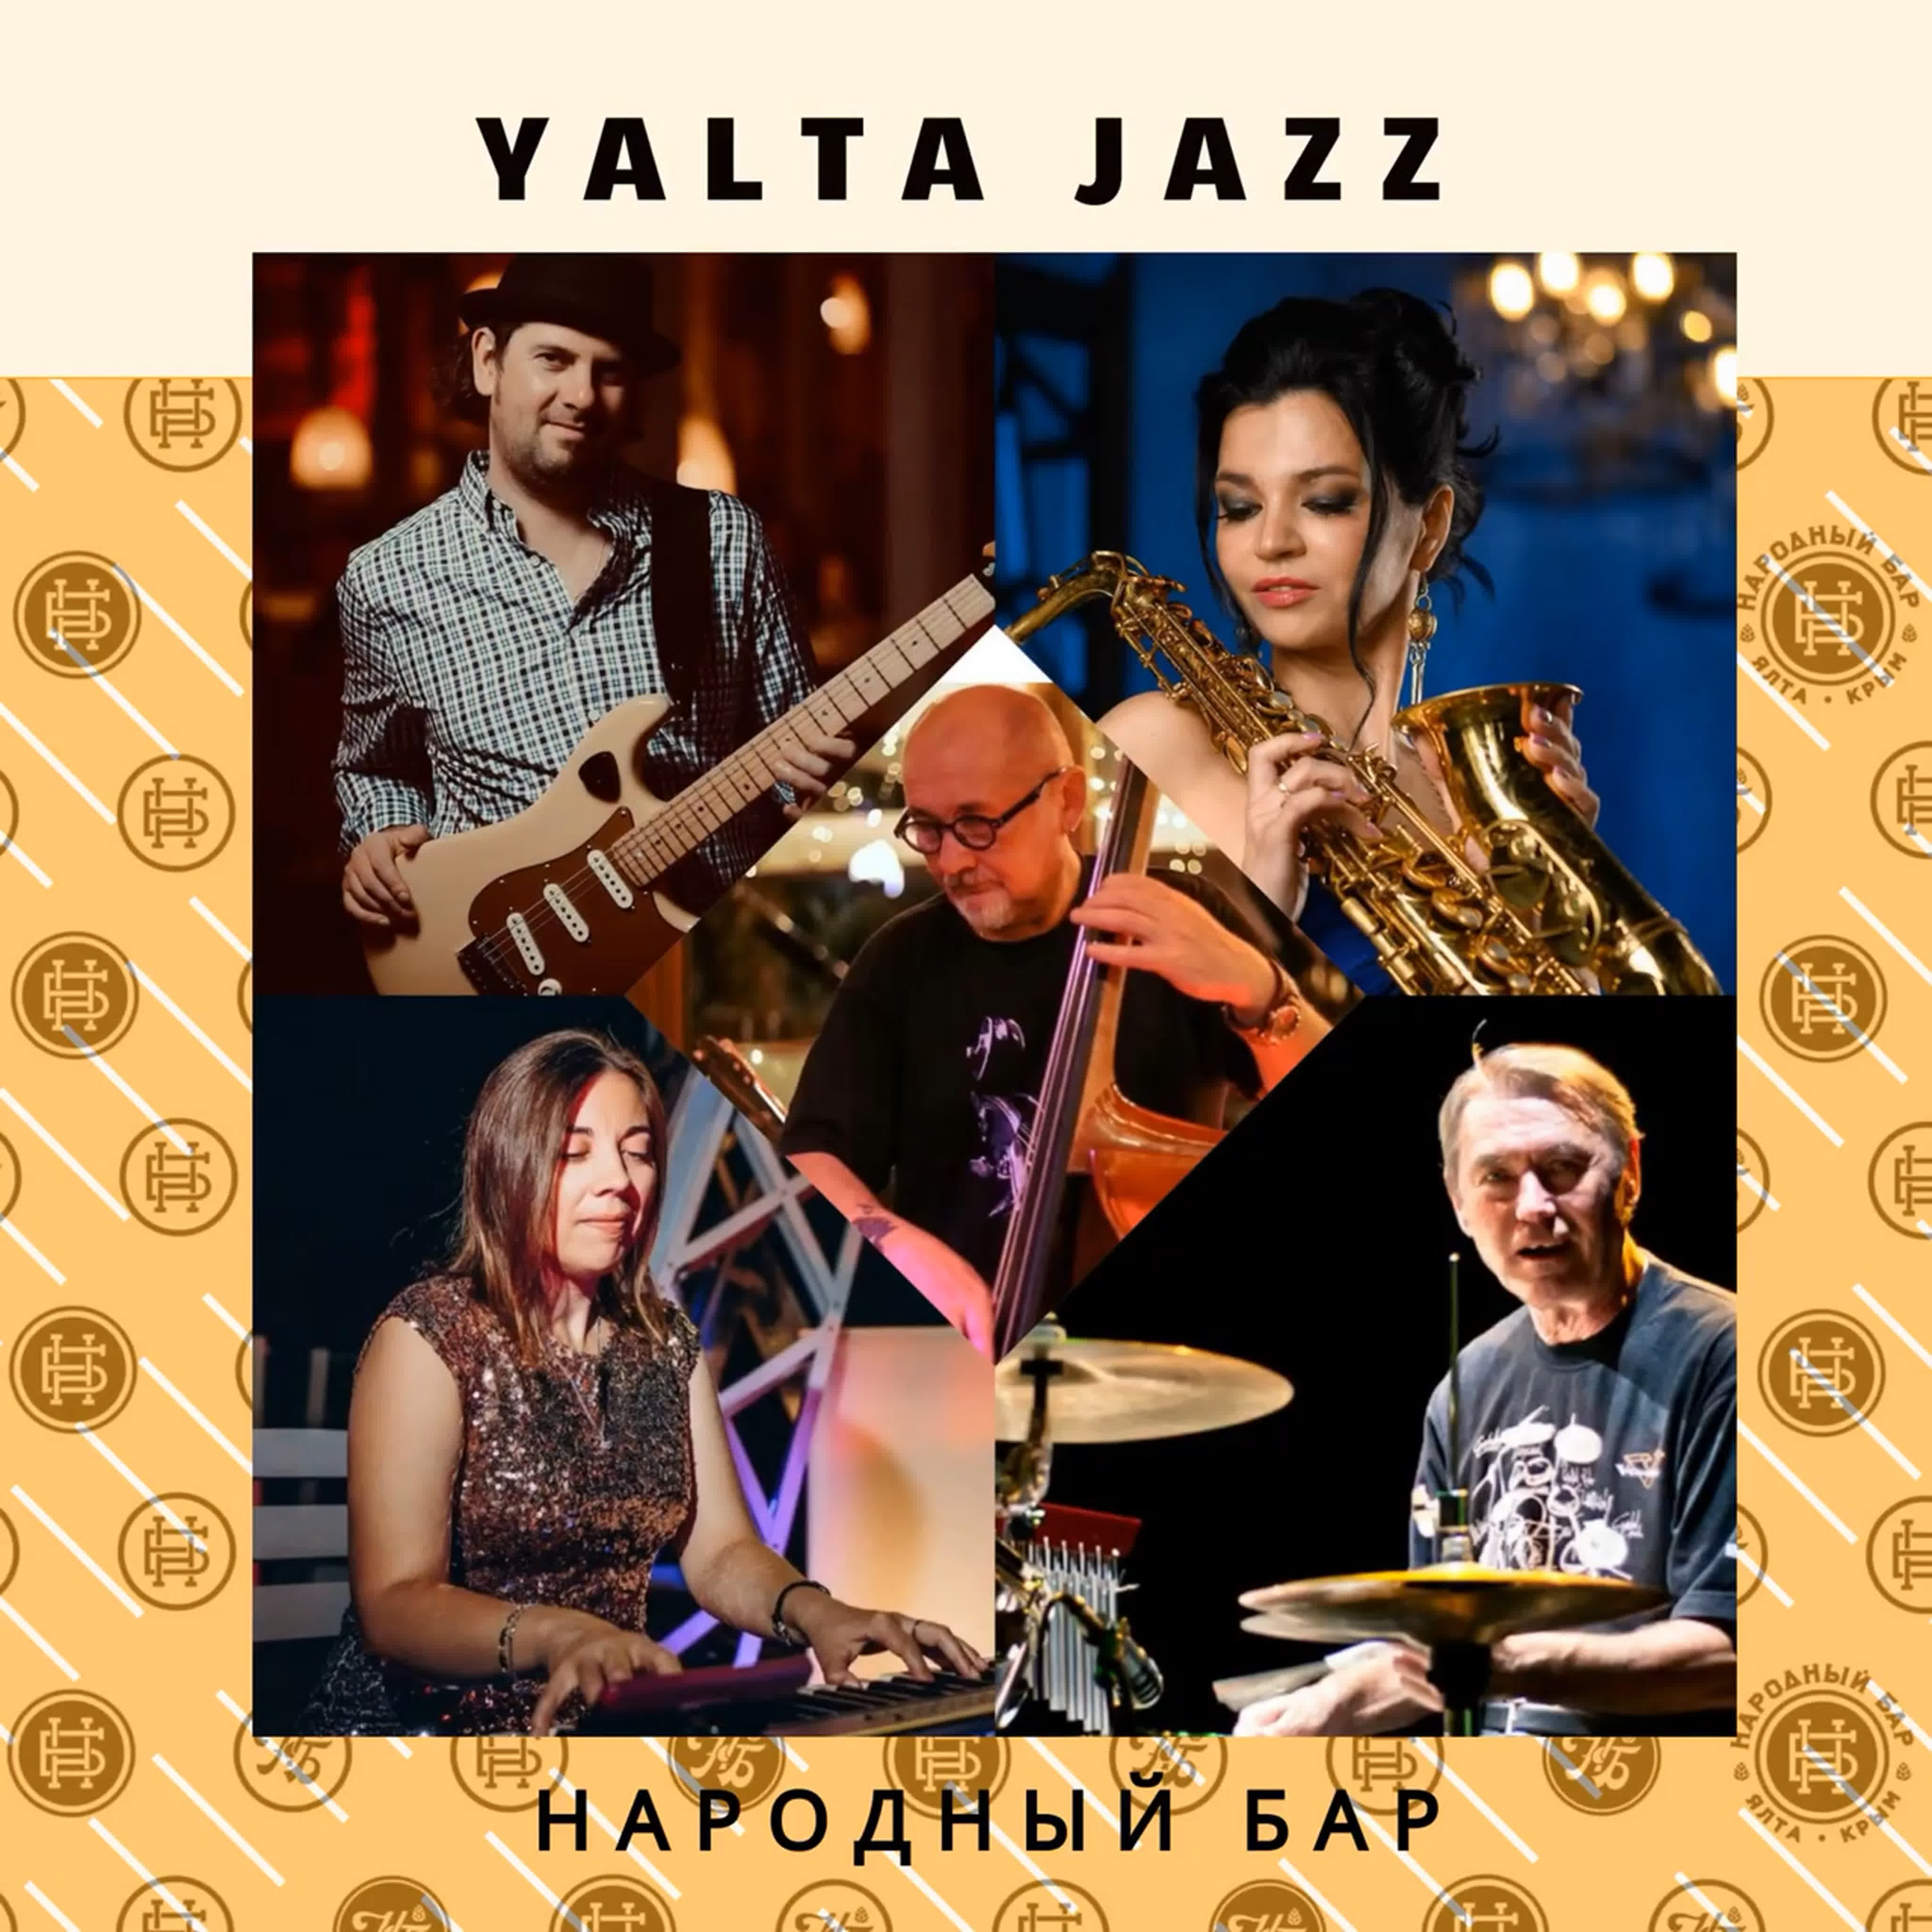 06 08 народный бар yalta jazz - BEST XXX TUBE